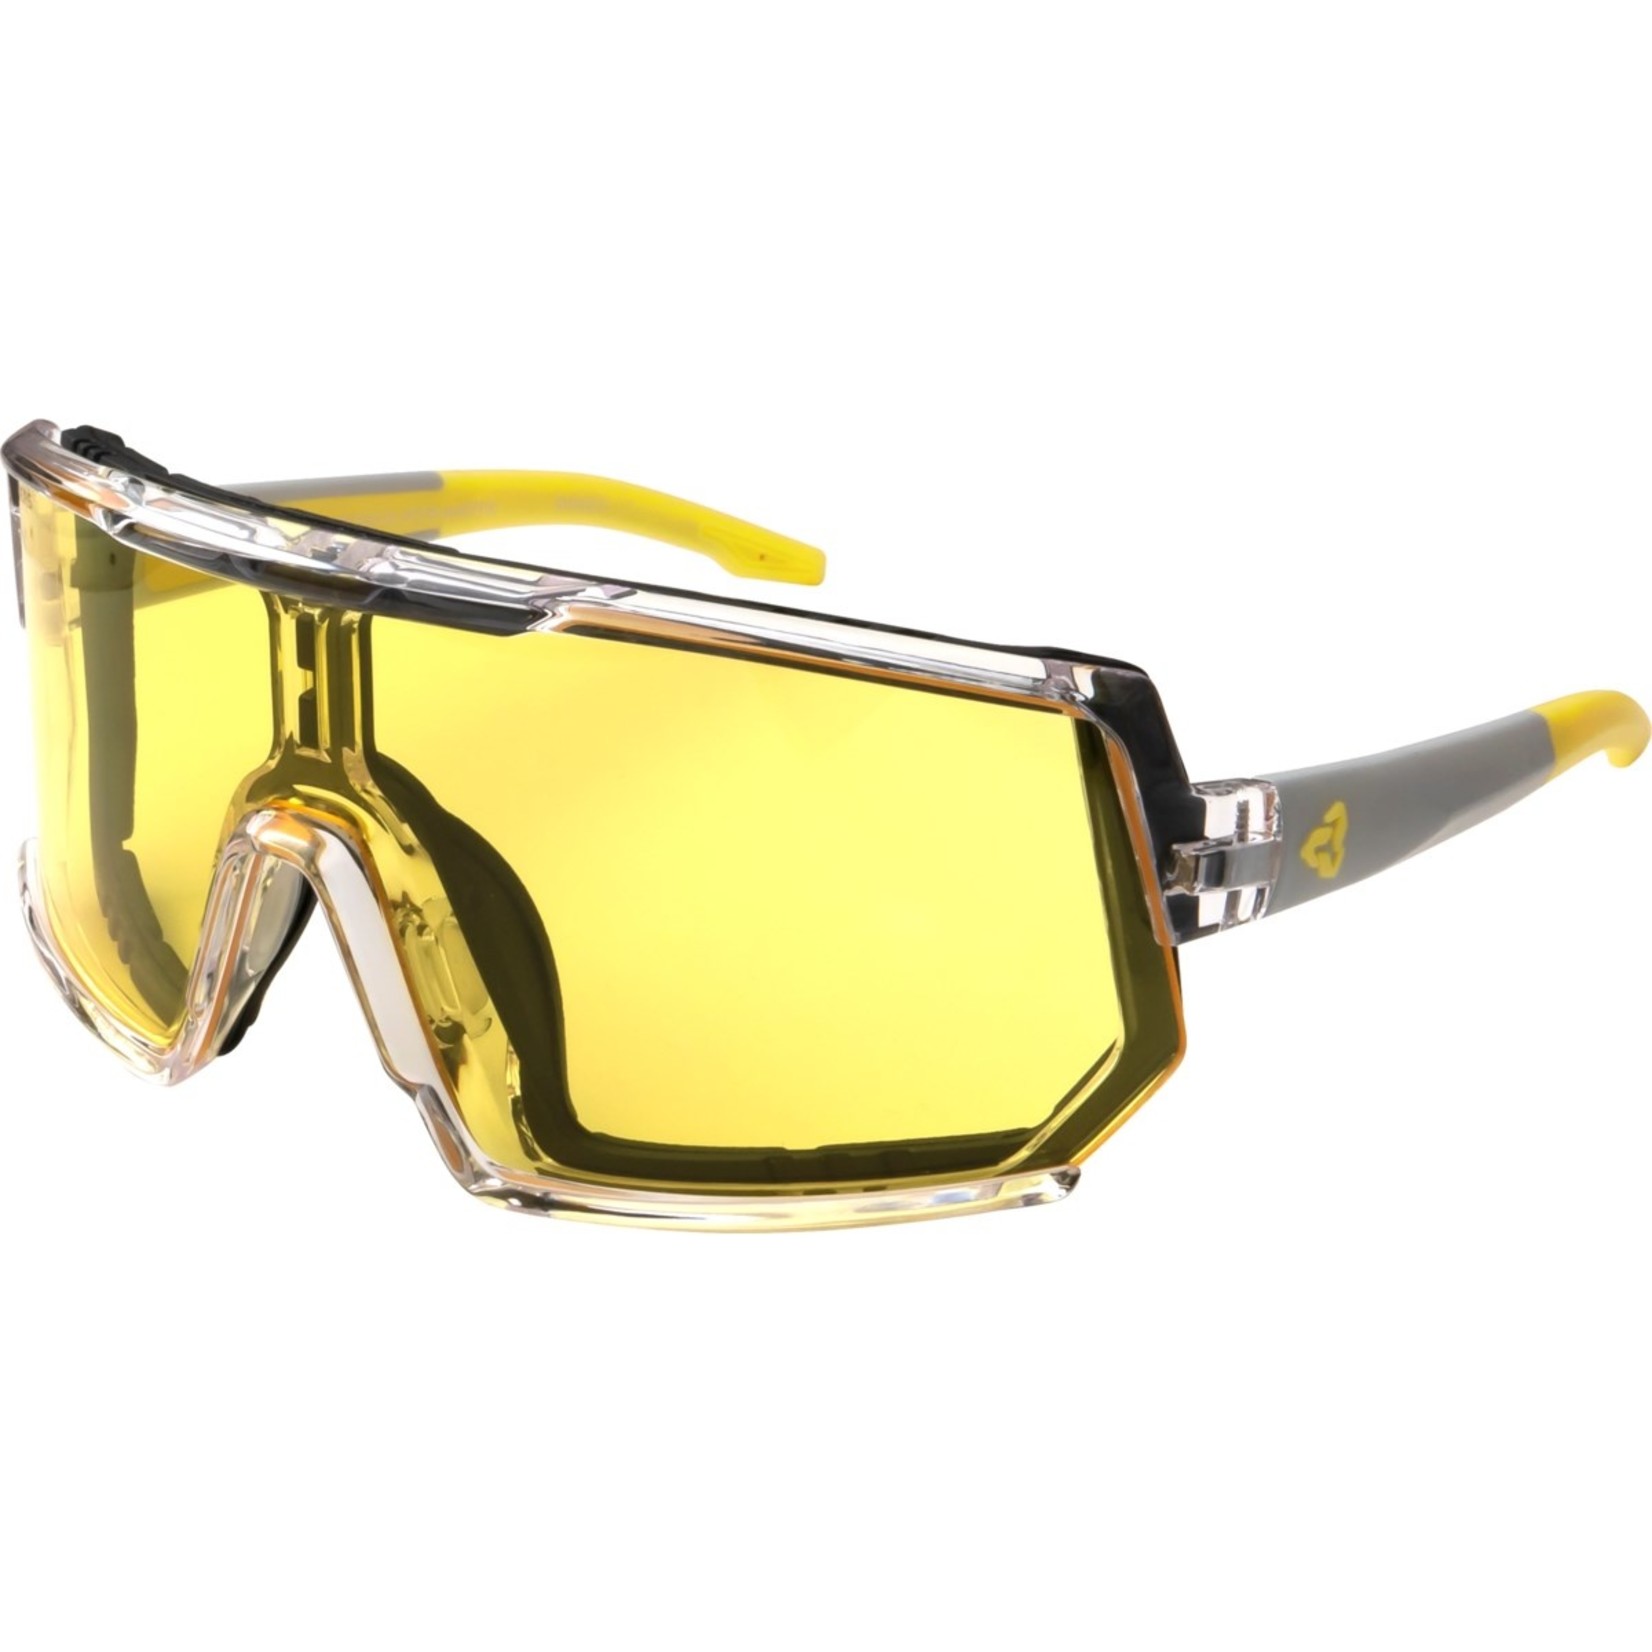 Ryders Eyewear Ryders Escalator Anti Fog Yellow Lense